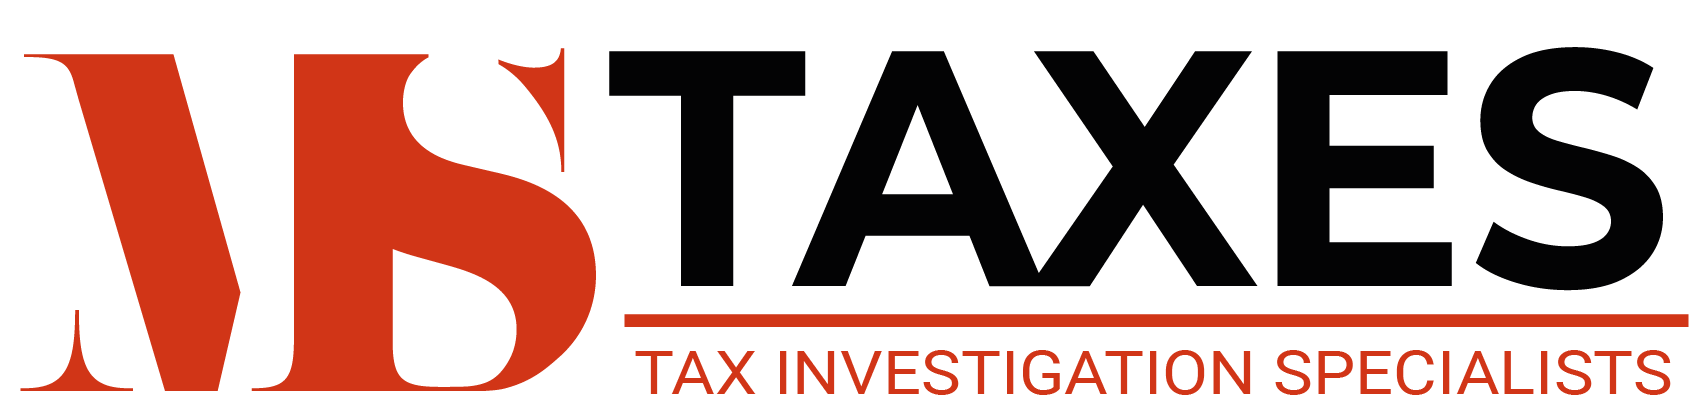 tax investigation specialists